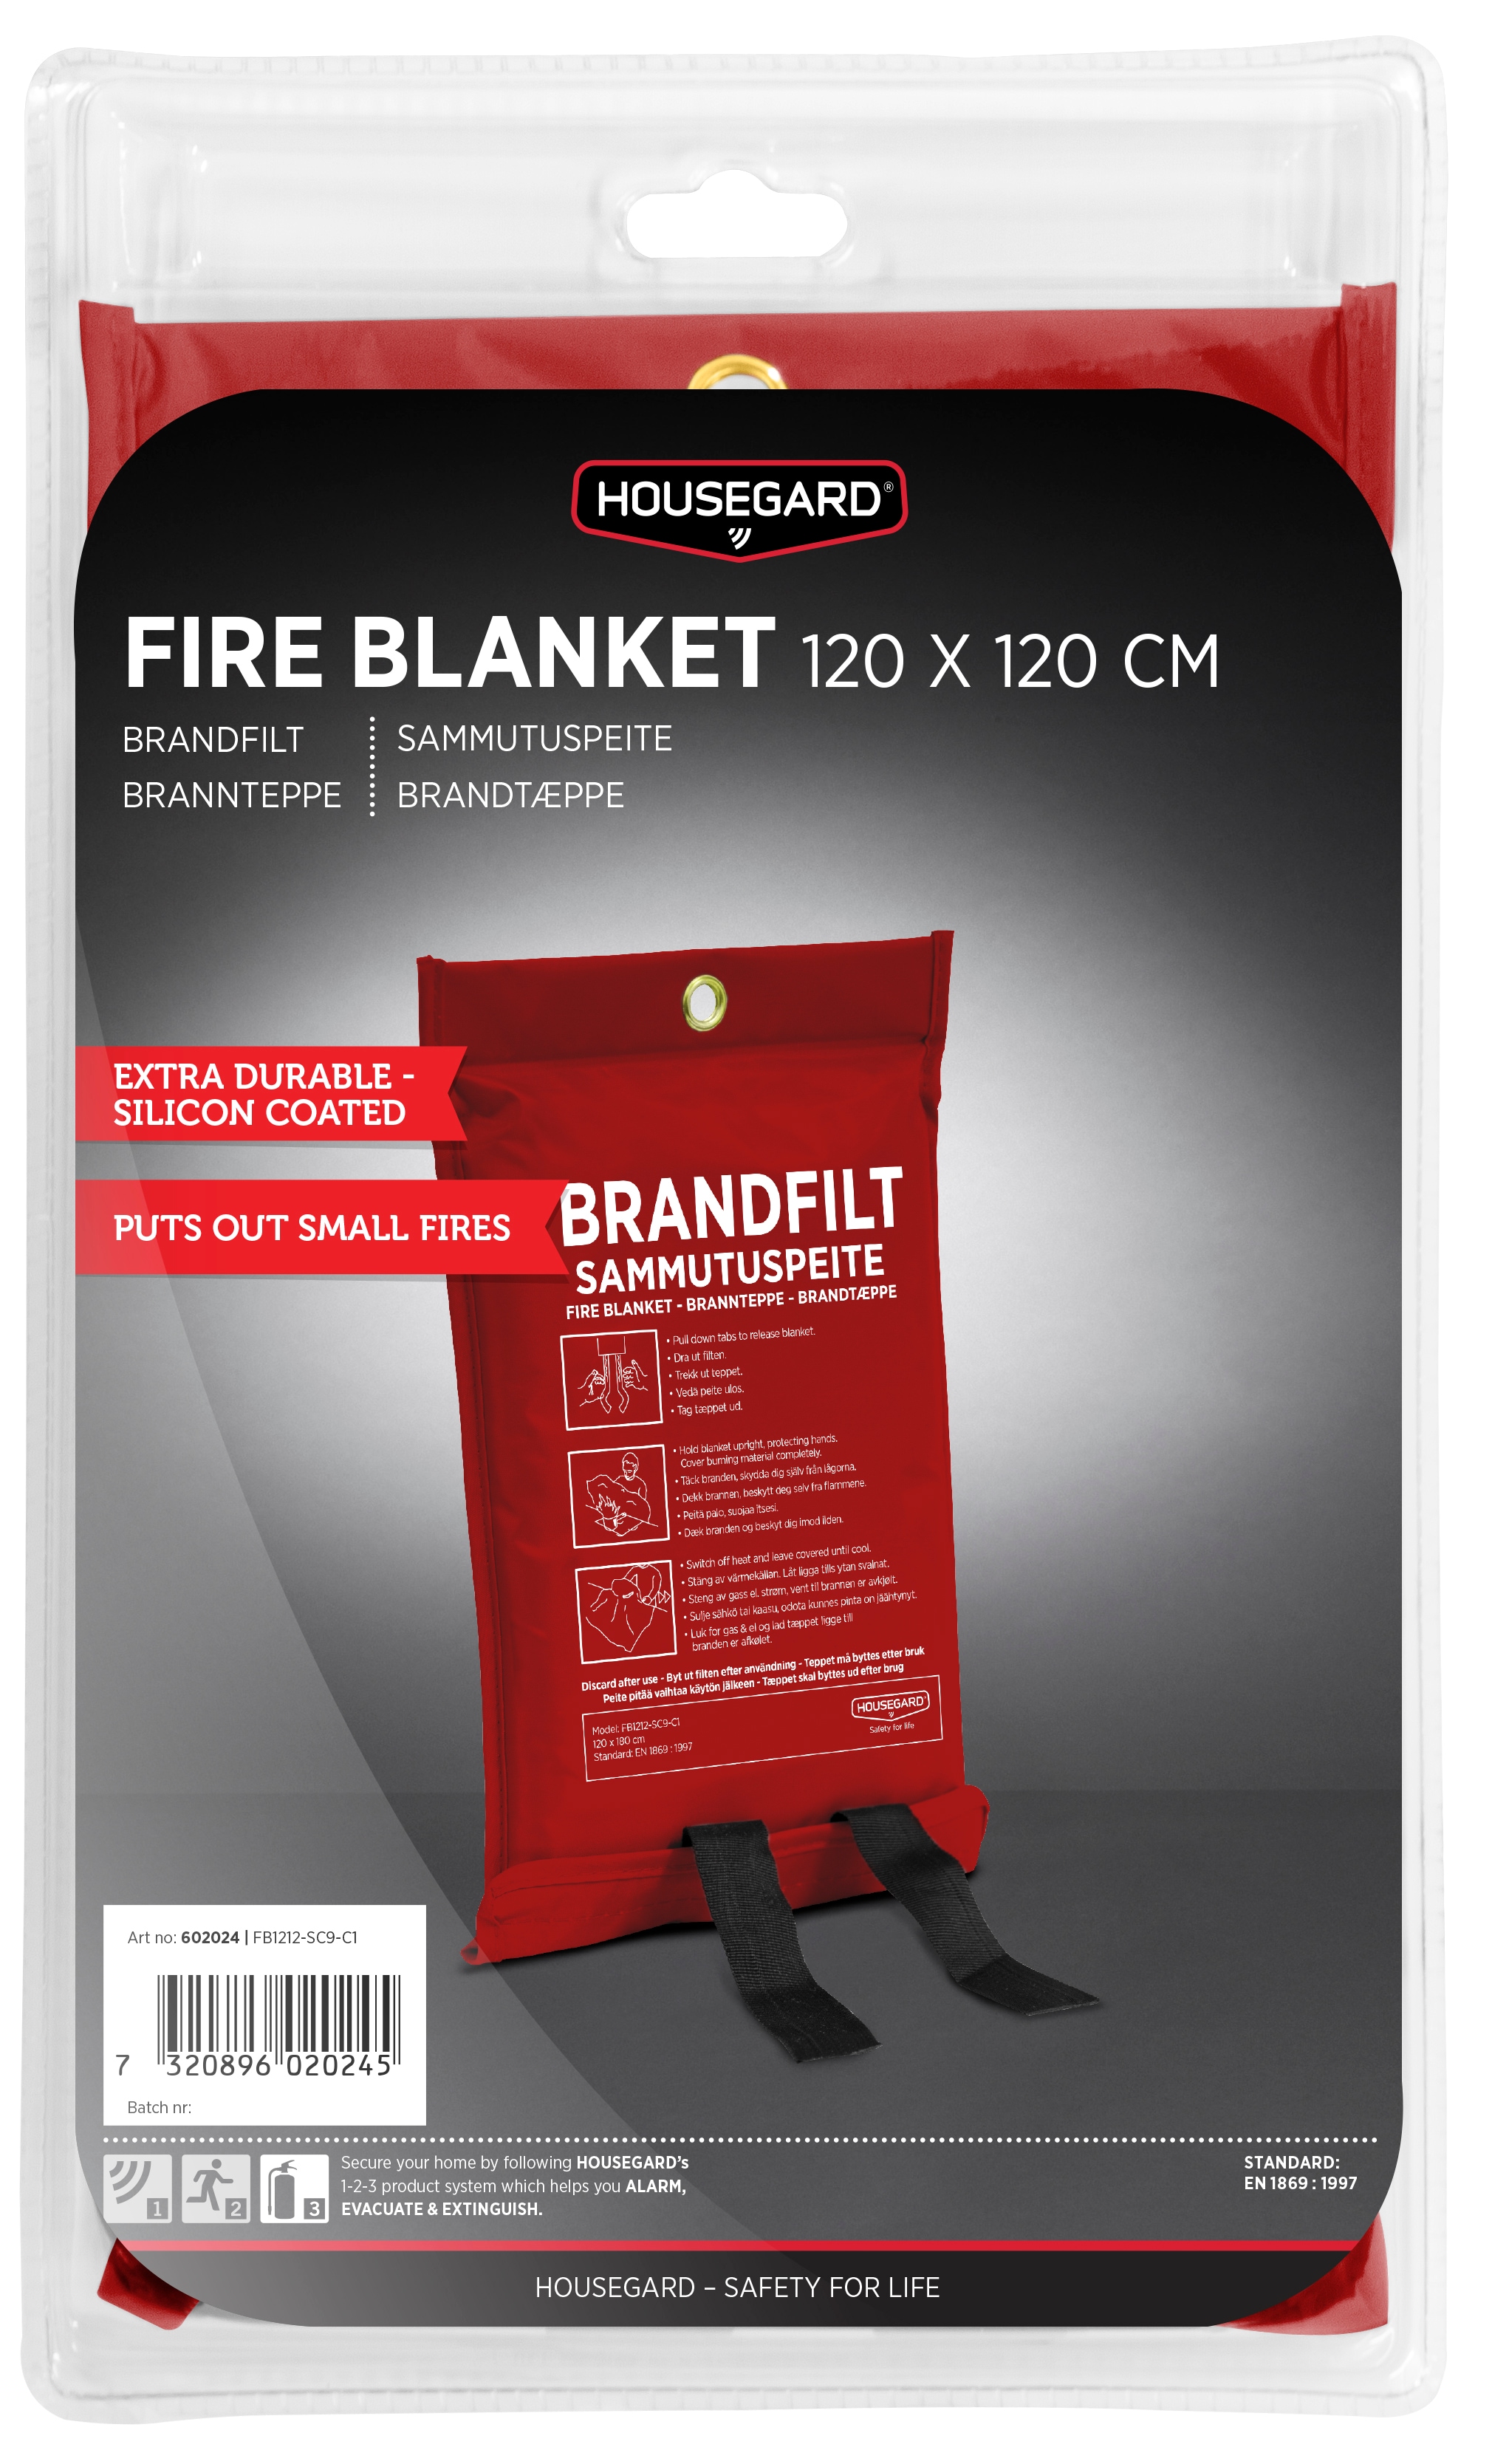 Housegard fireblanket, 120x120 cm, red